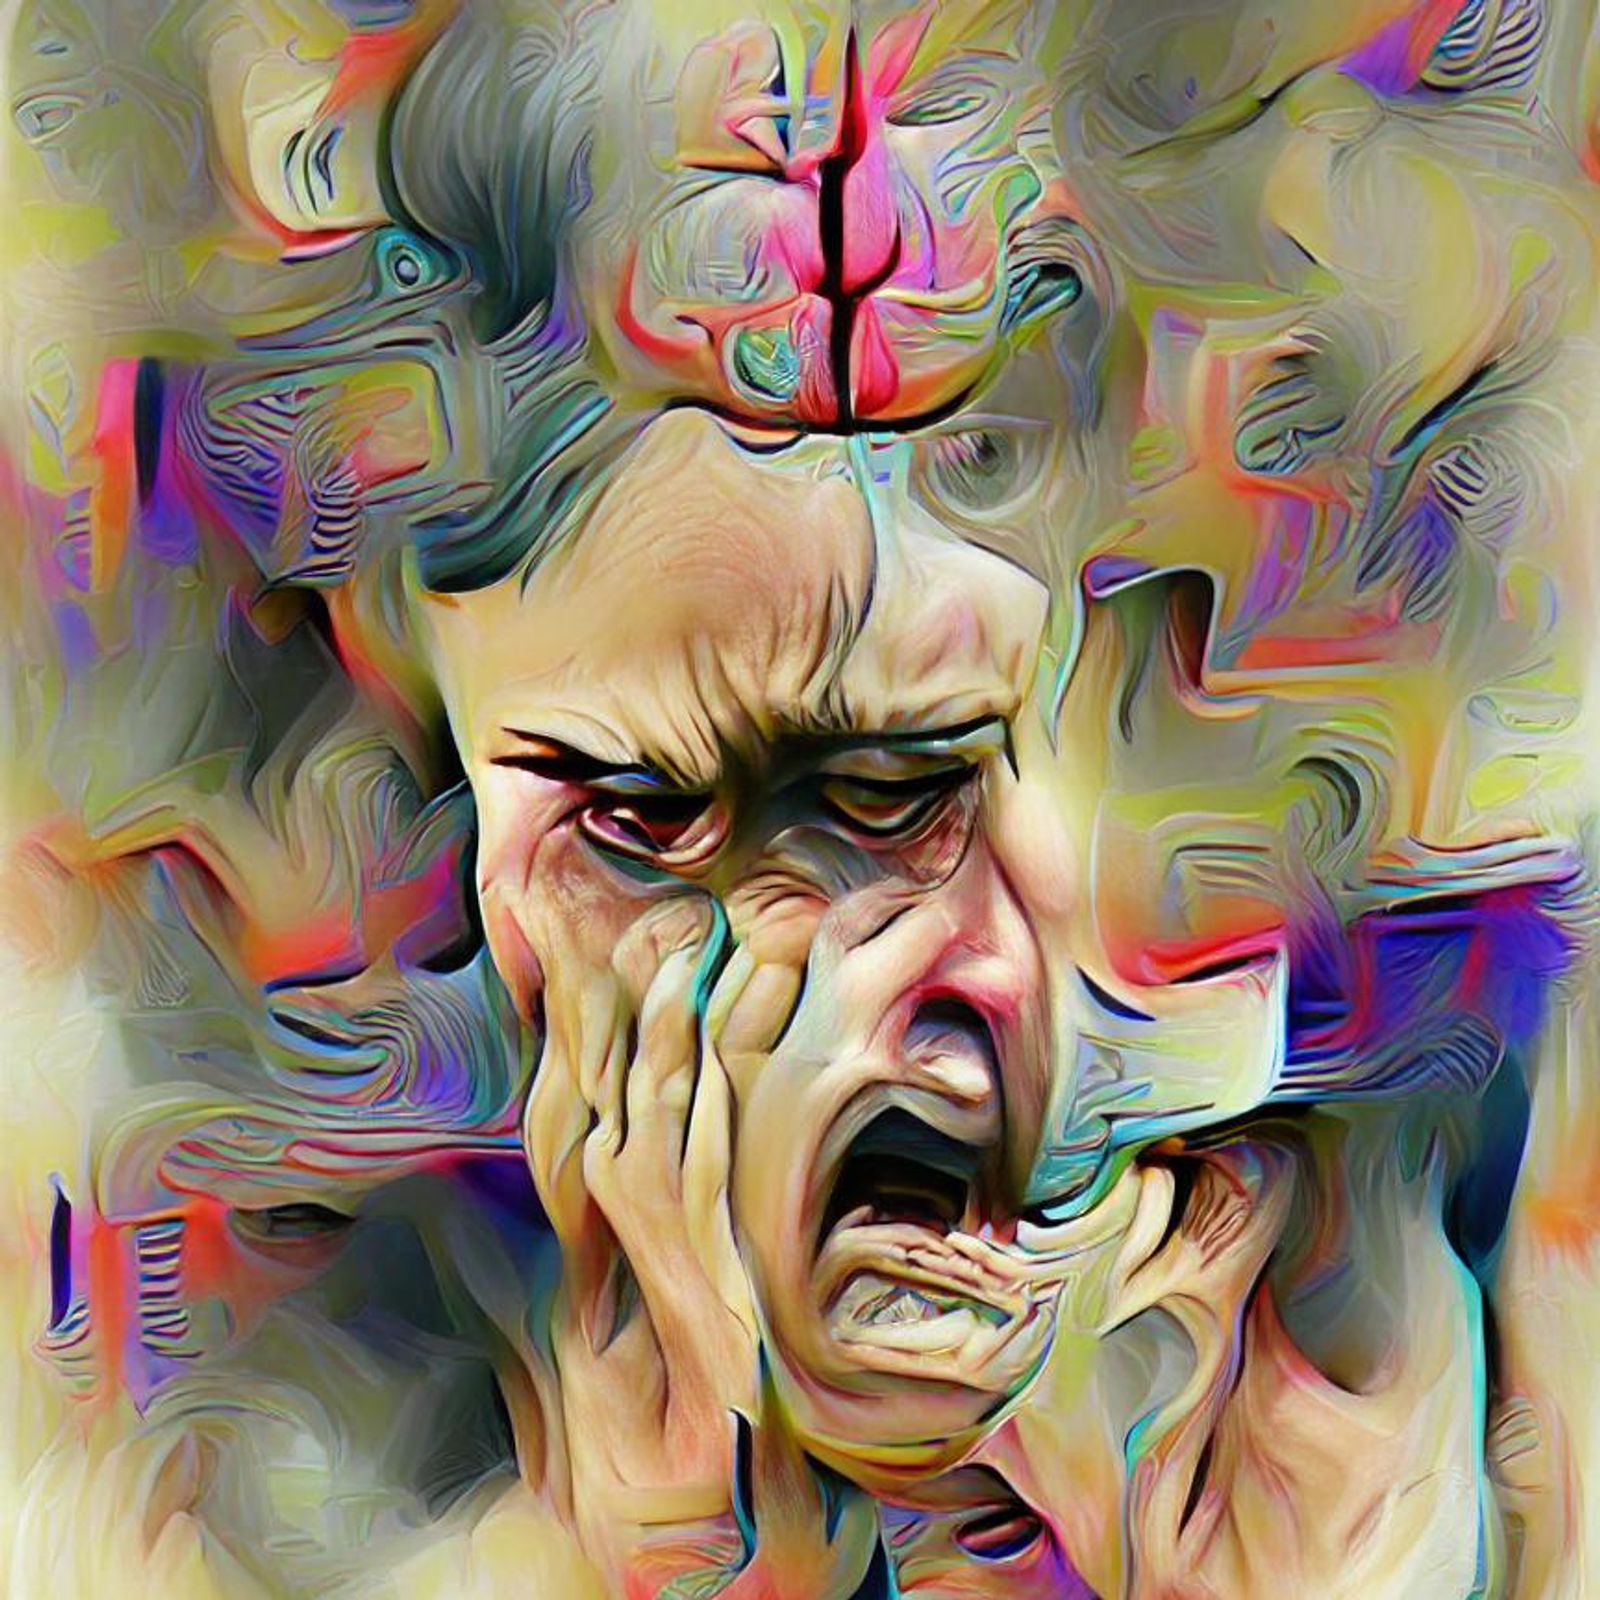 mental anguish